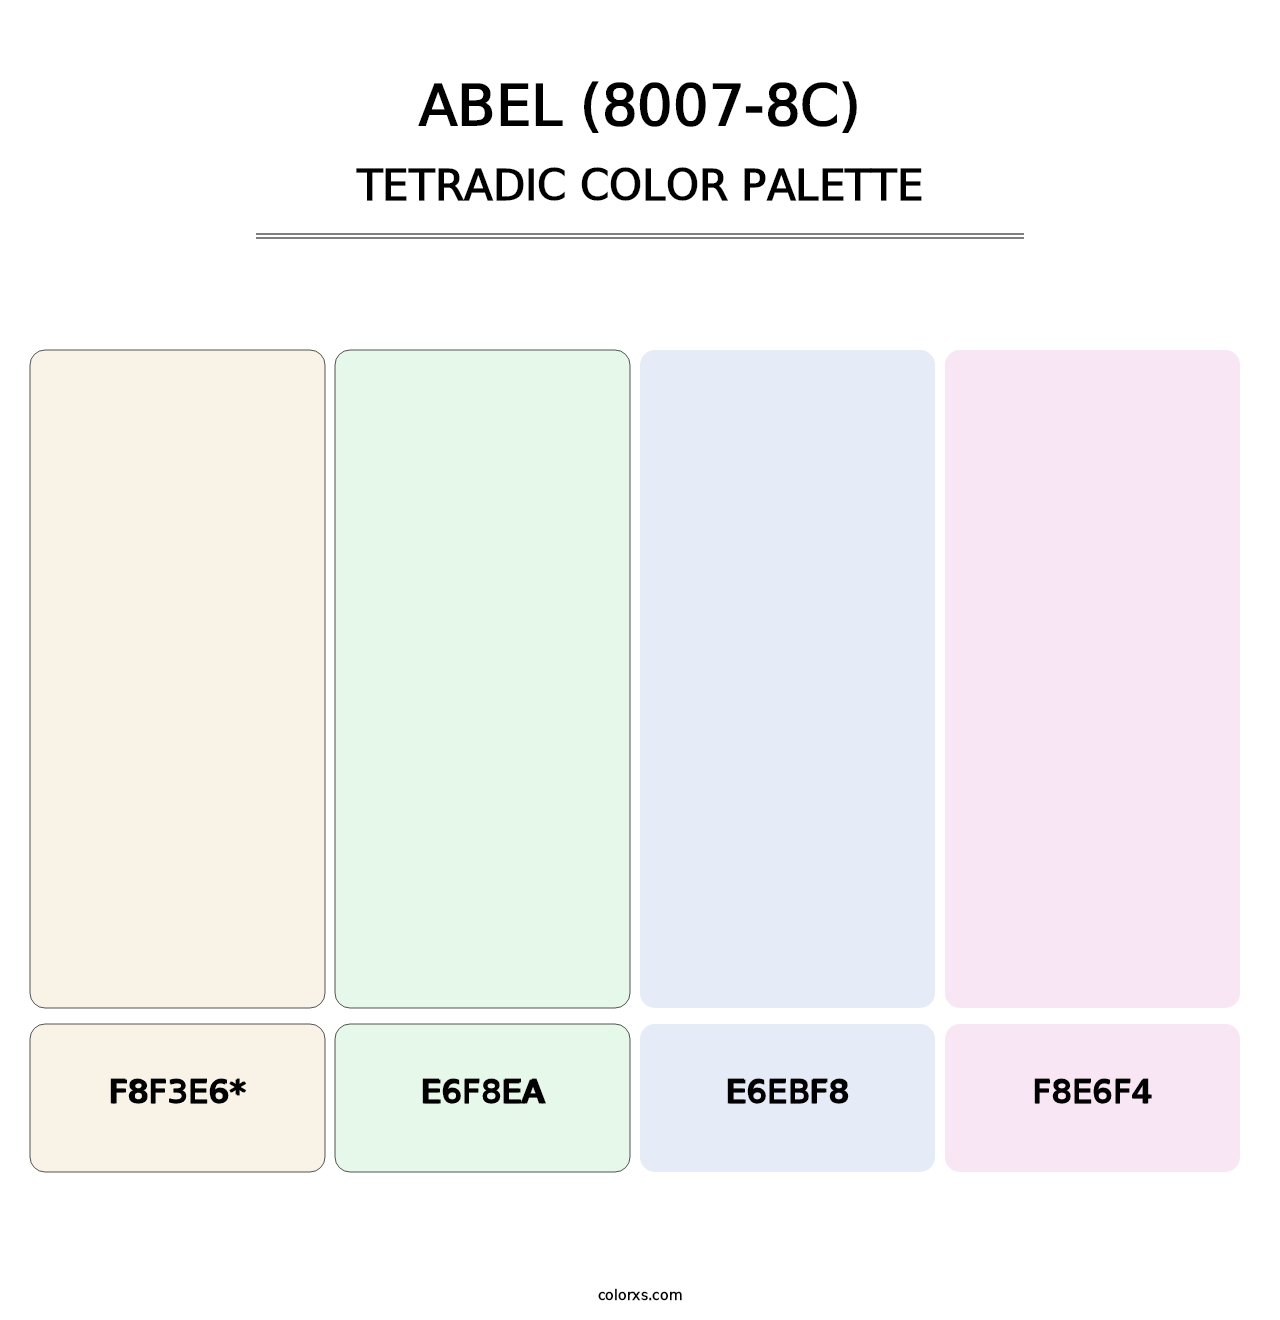 Abel (8007-8C) - Tetradic Color Palette